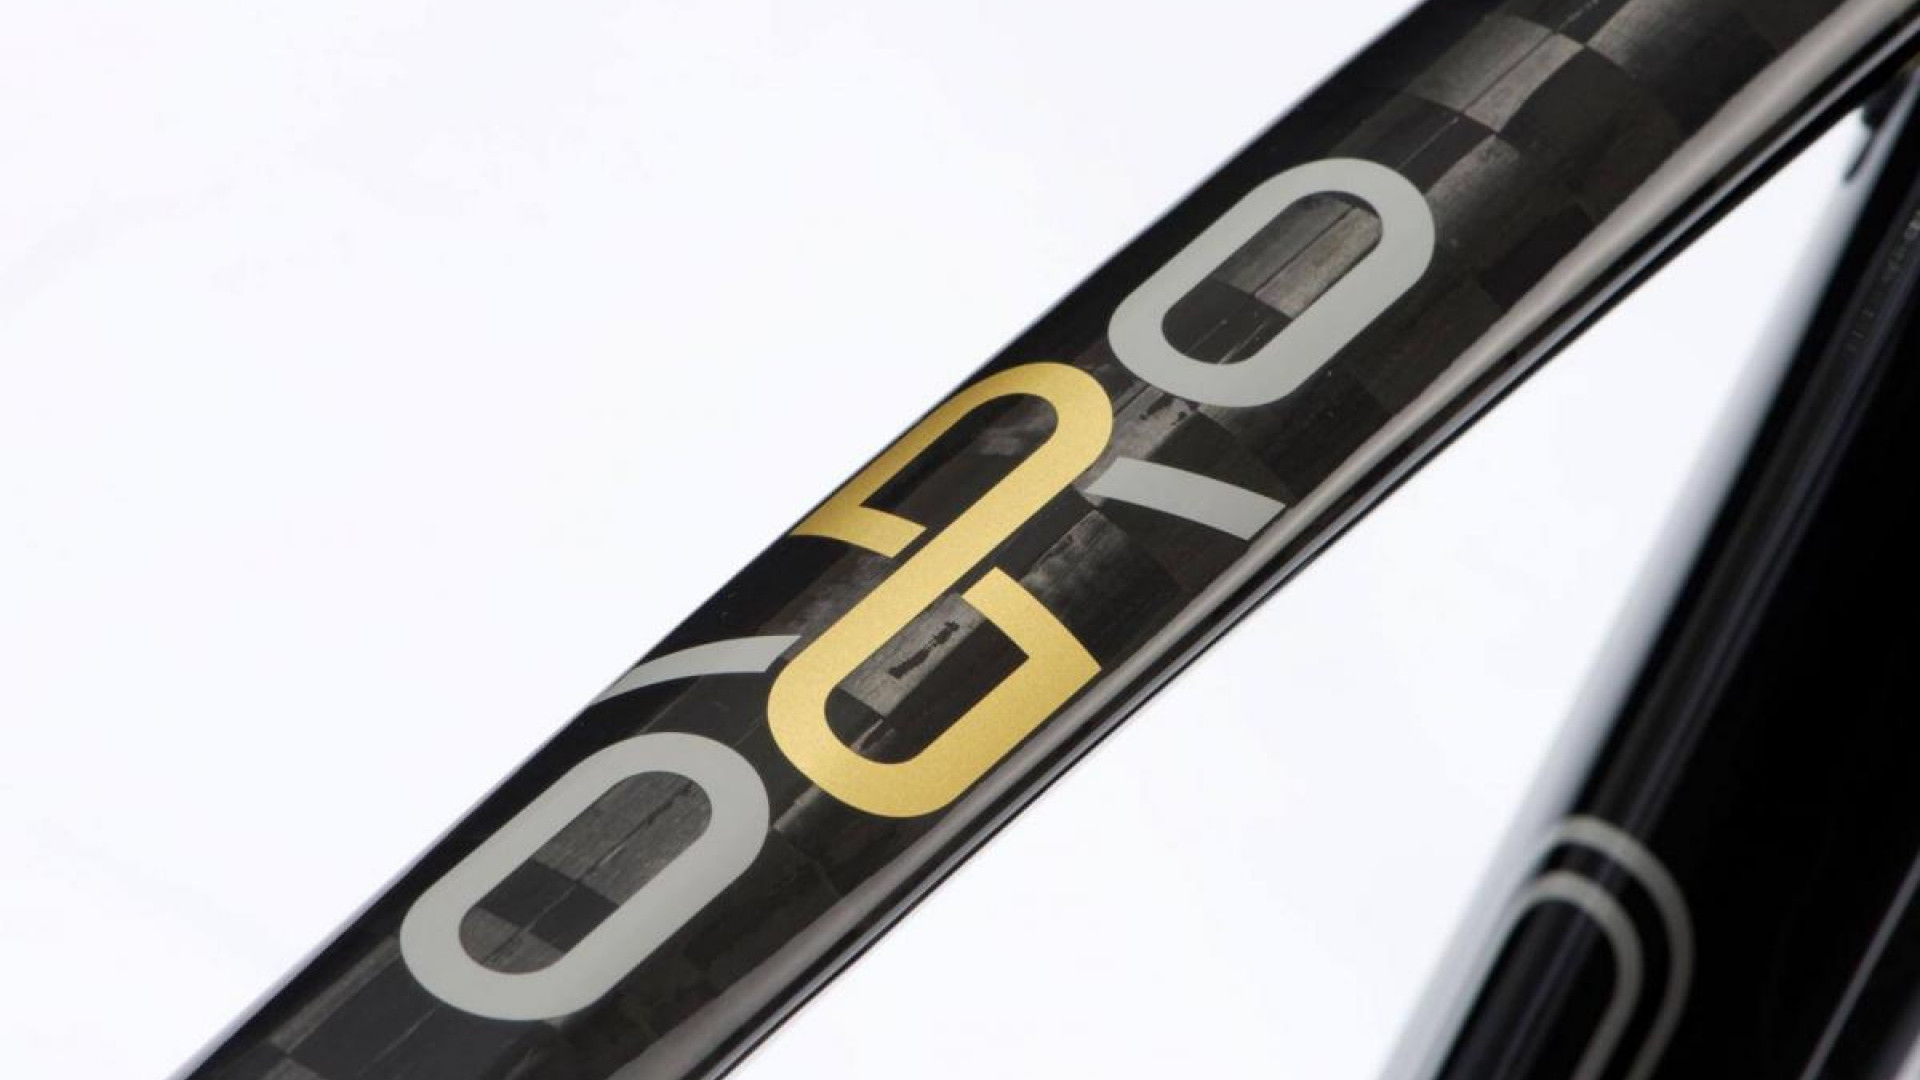 Closeup photography of the Orro logo on a carbon bike frame